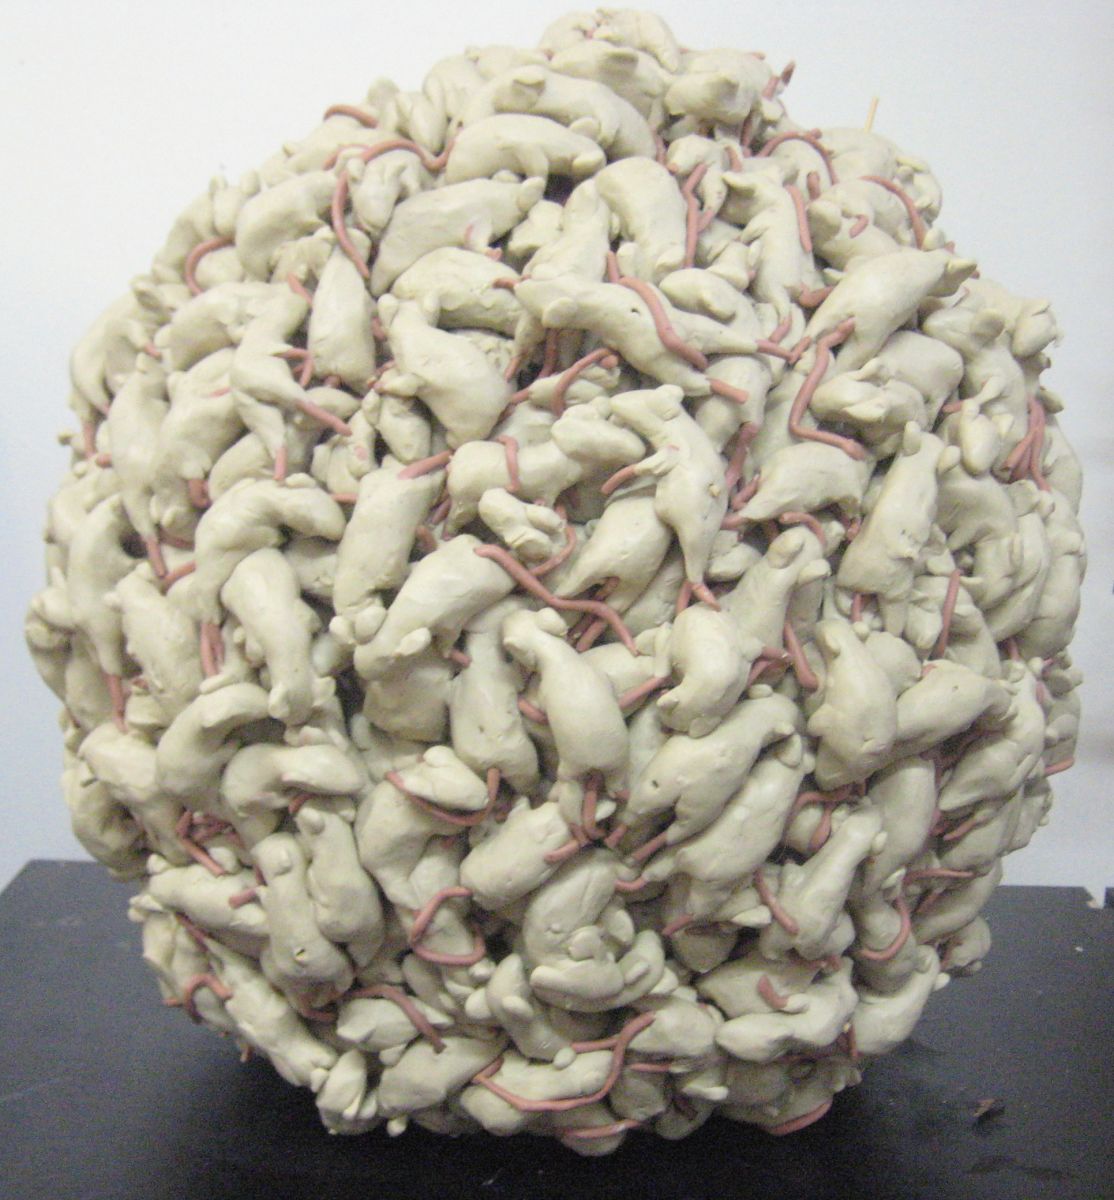 Sculpture, "Mice Ball" by David Poolman